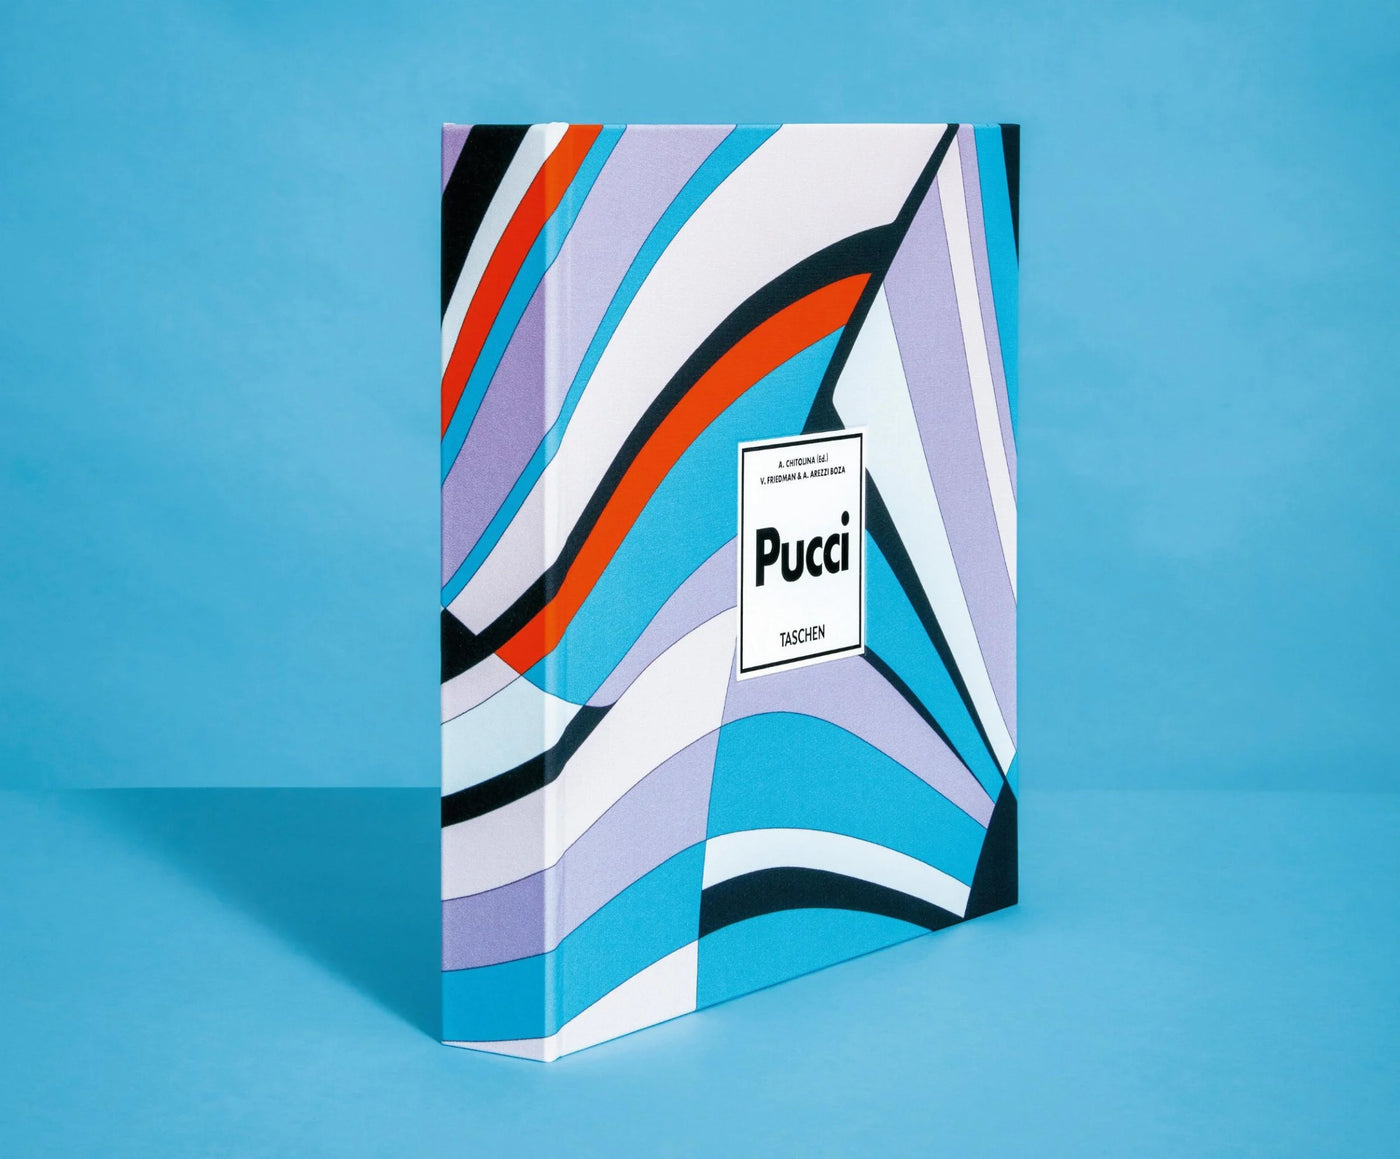 klt: sketchbook : {Fabric Friday} Emilio Pucci